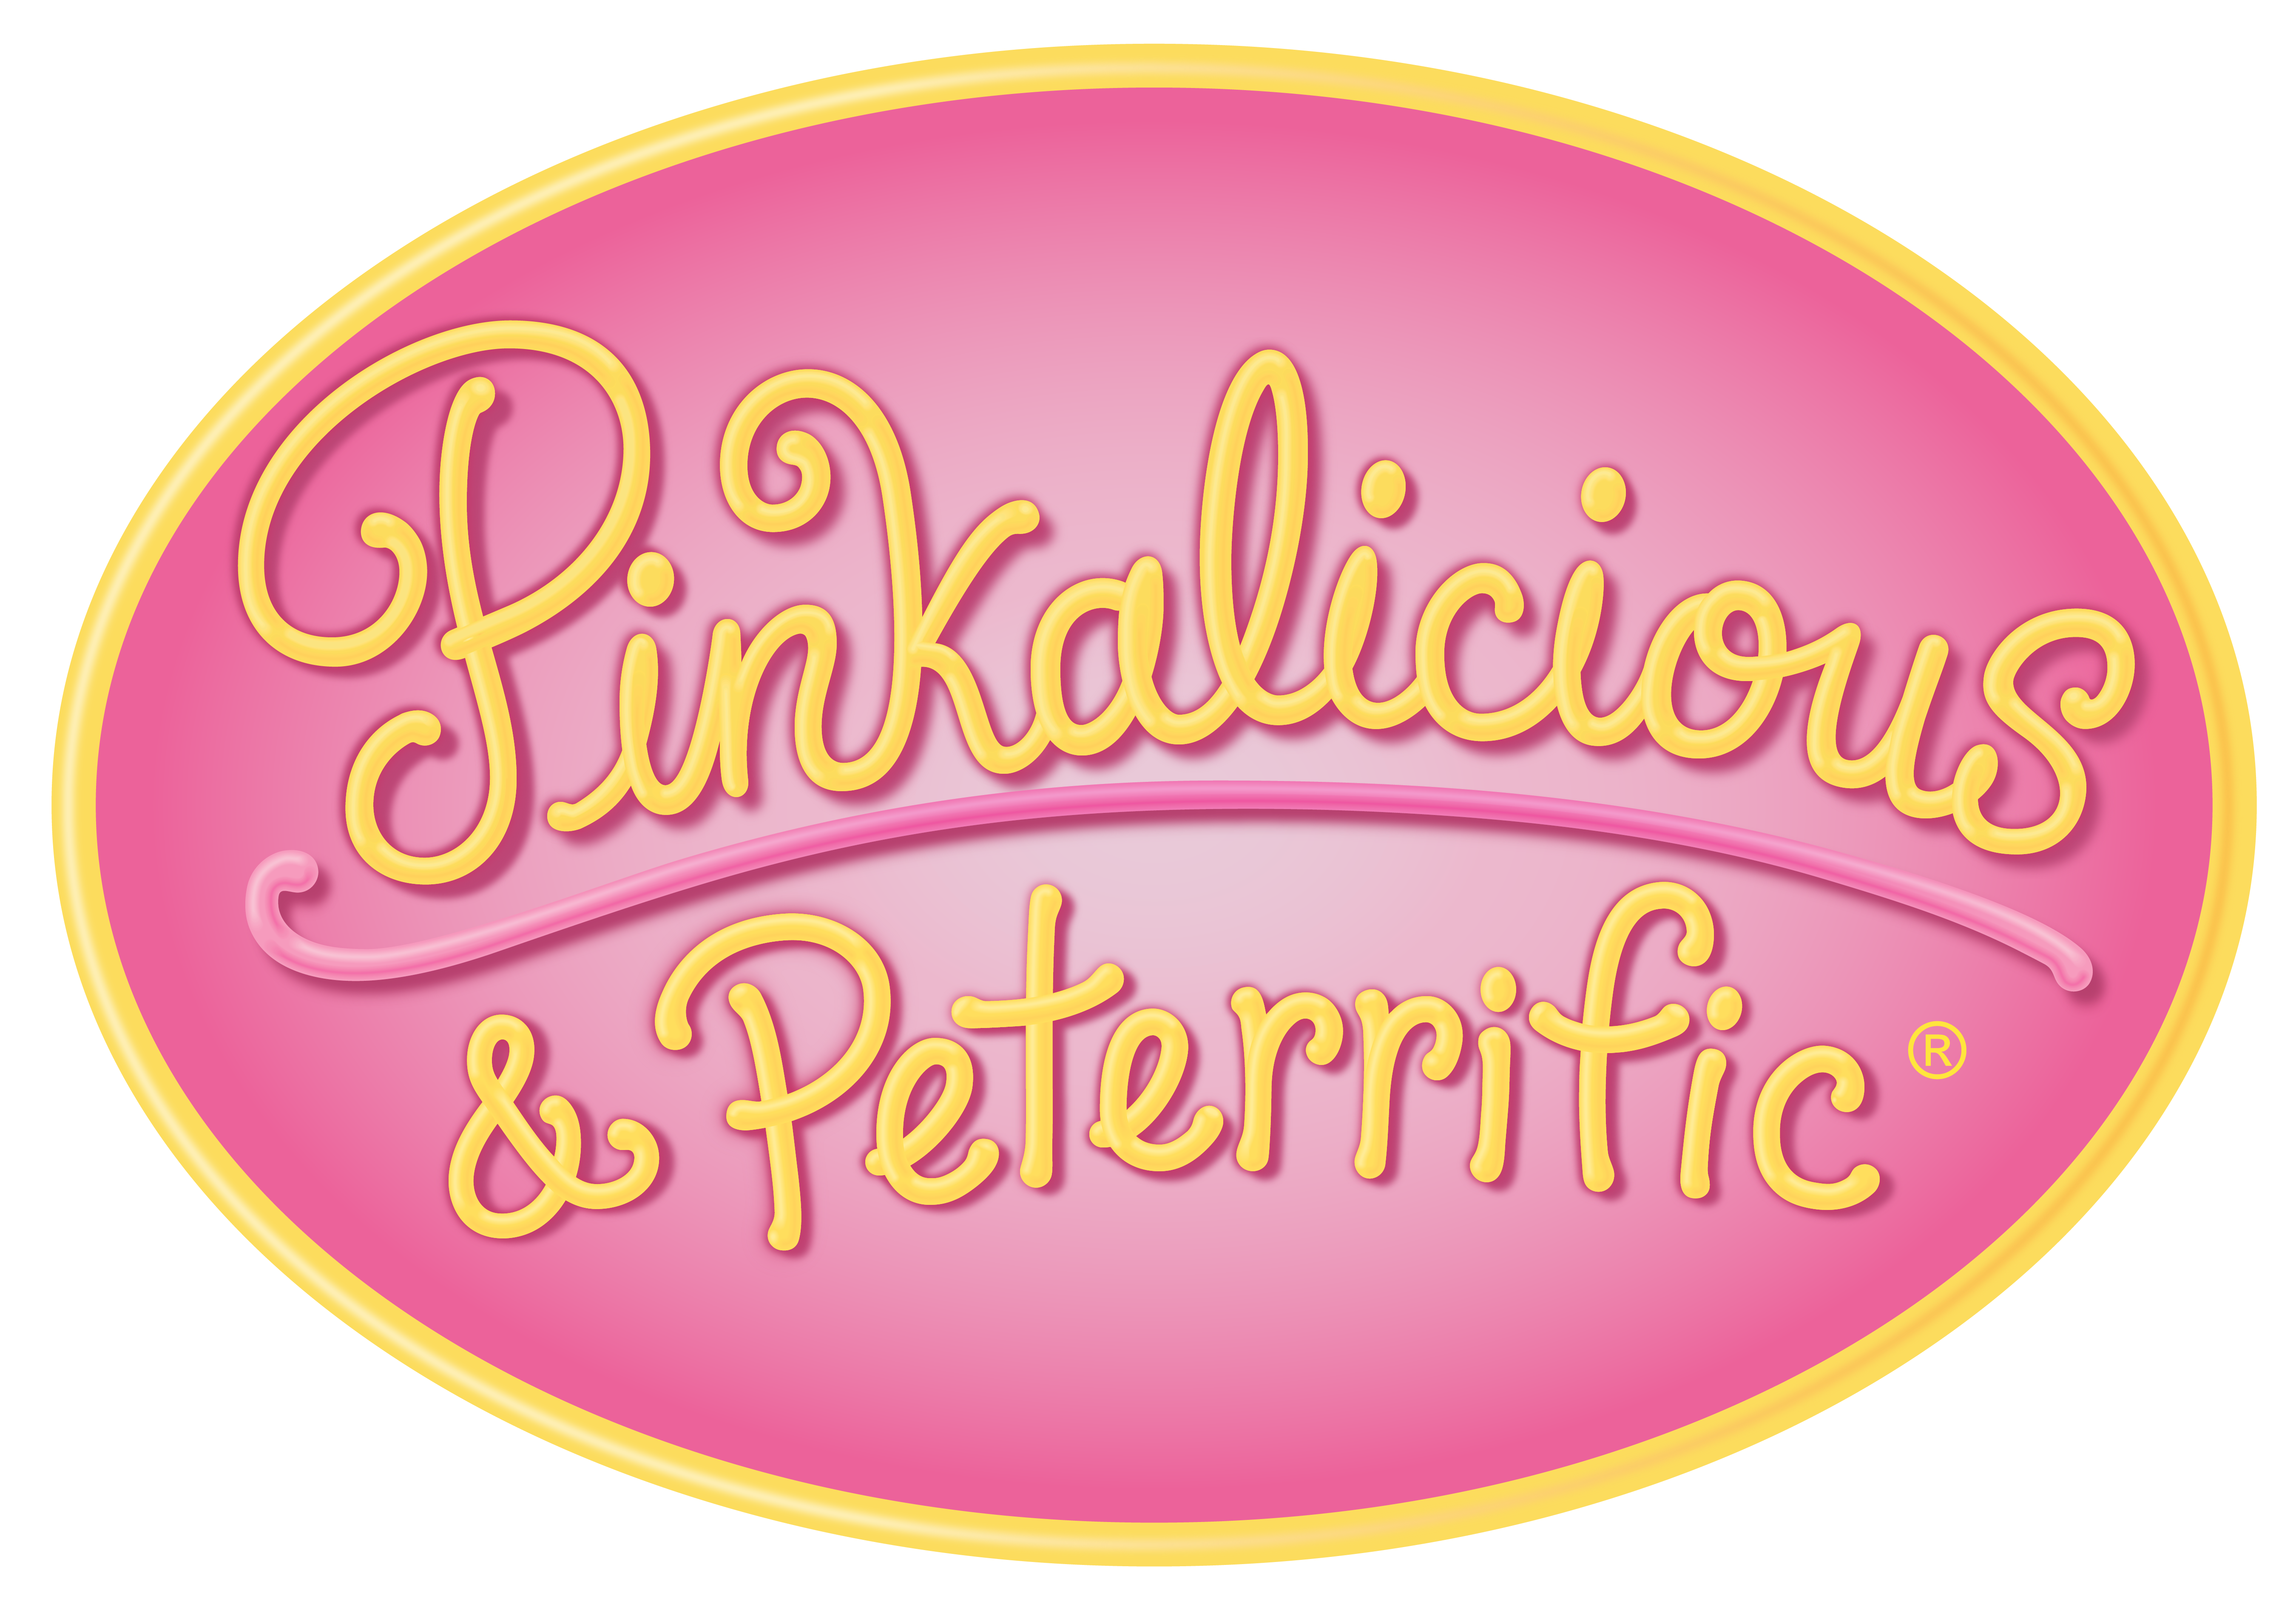 Pinkalicious & Peterrific